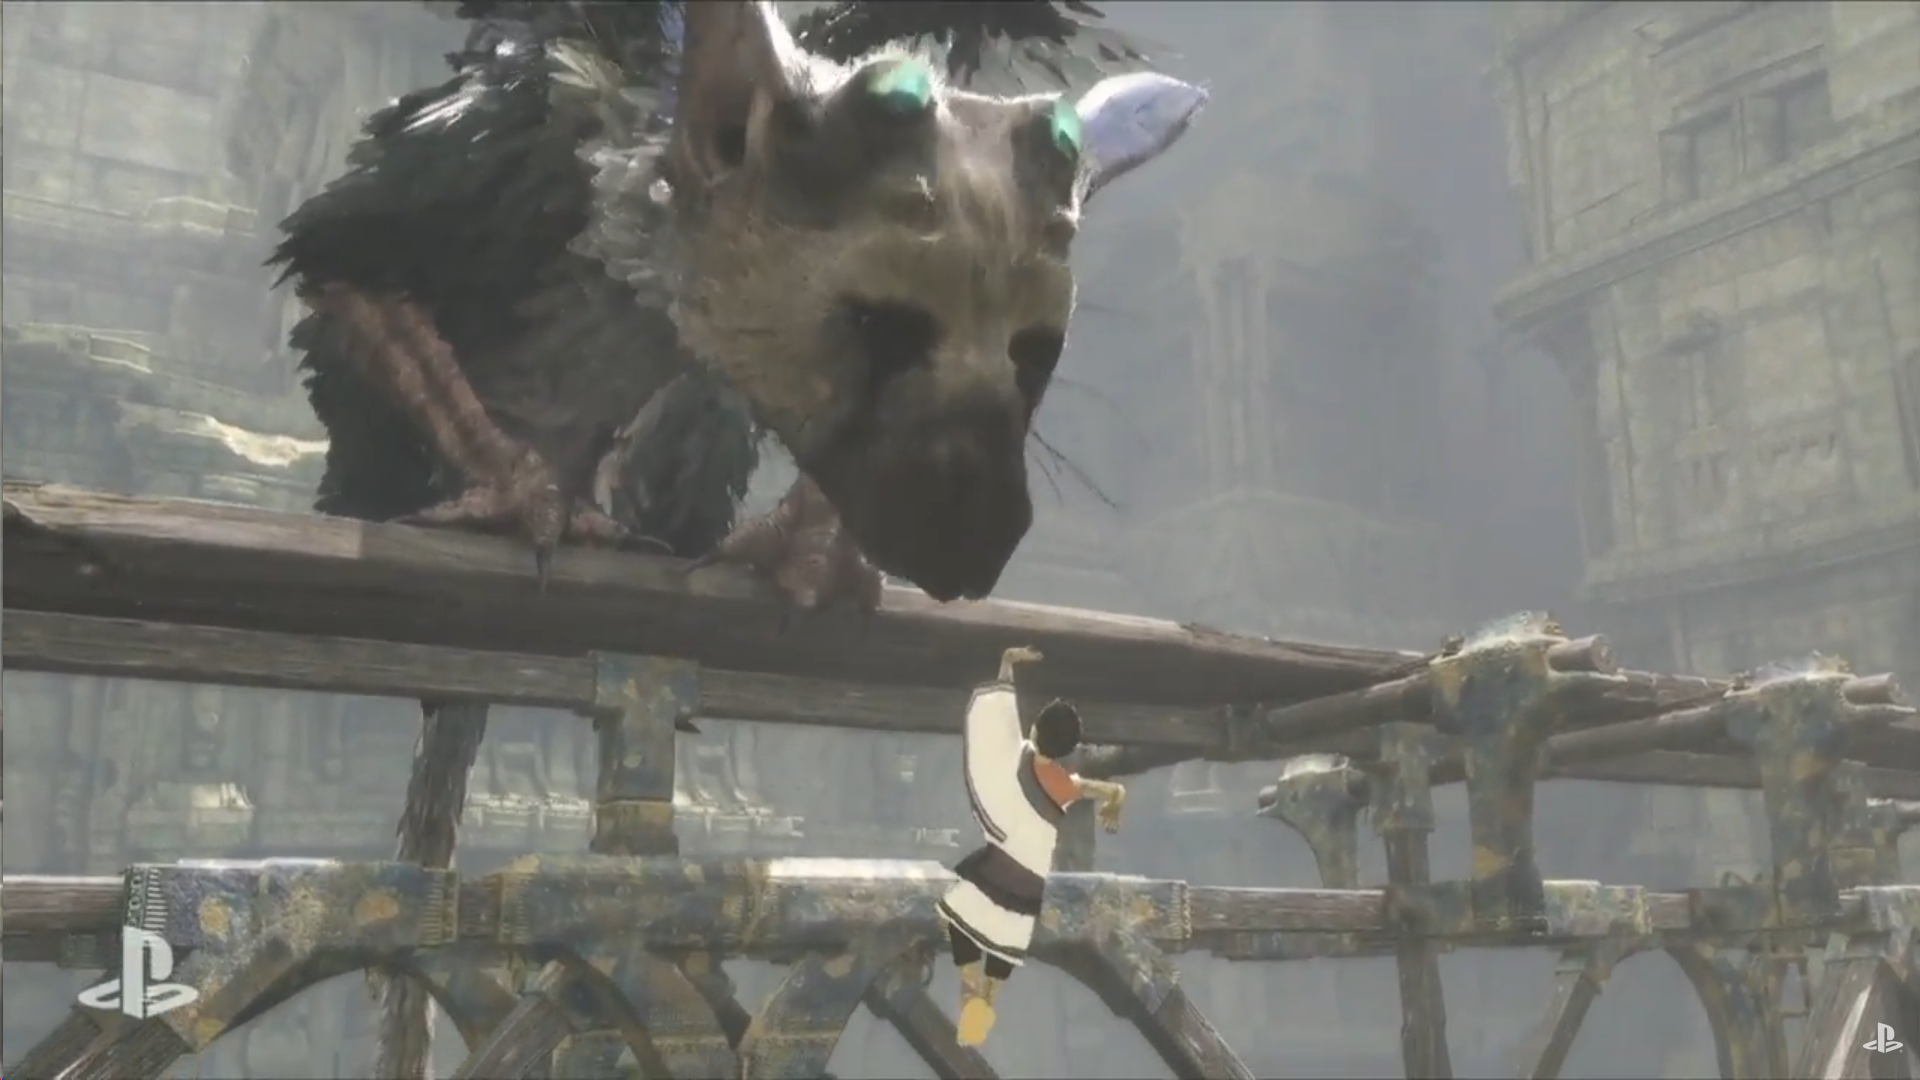 The Last Guardian - E3 2015 Trailer